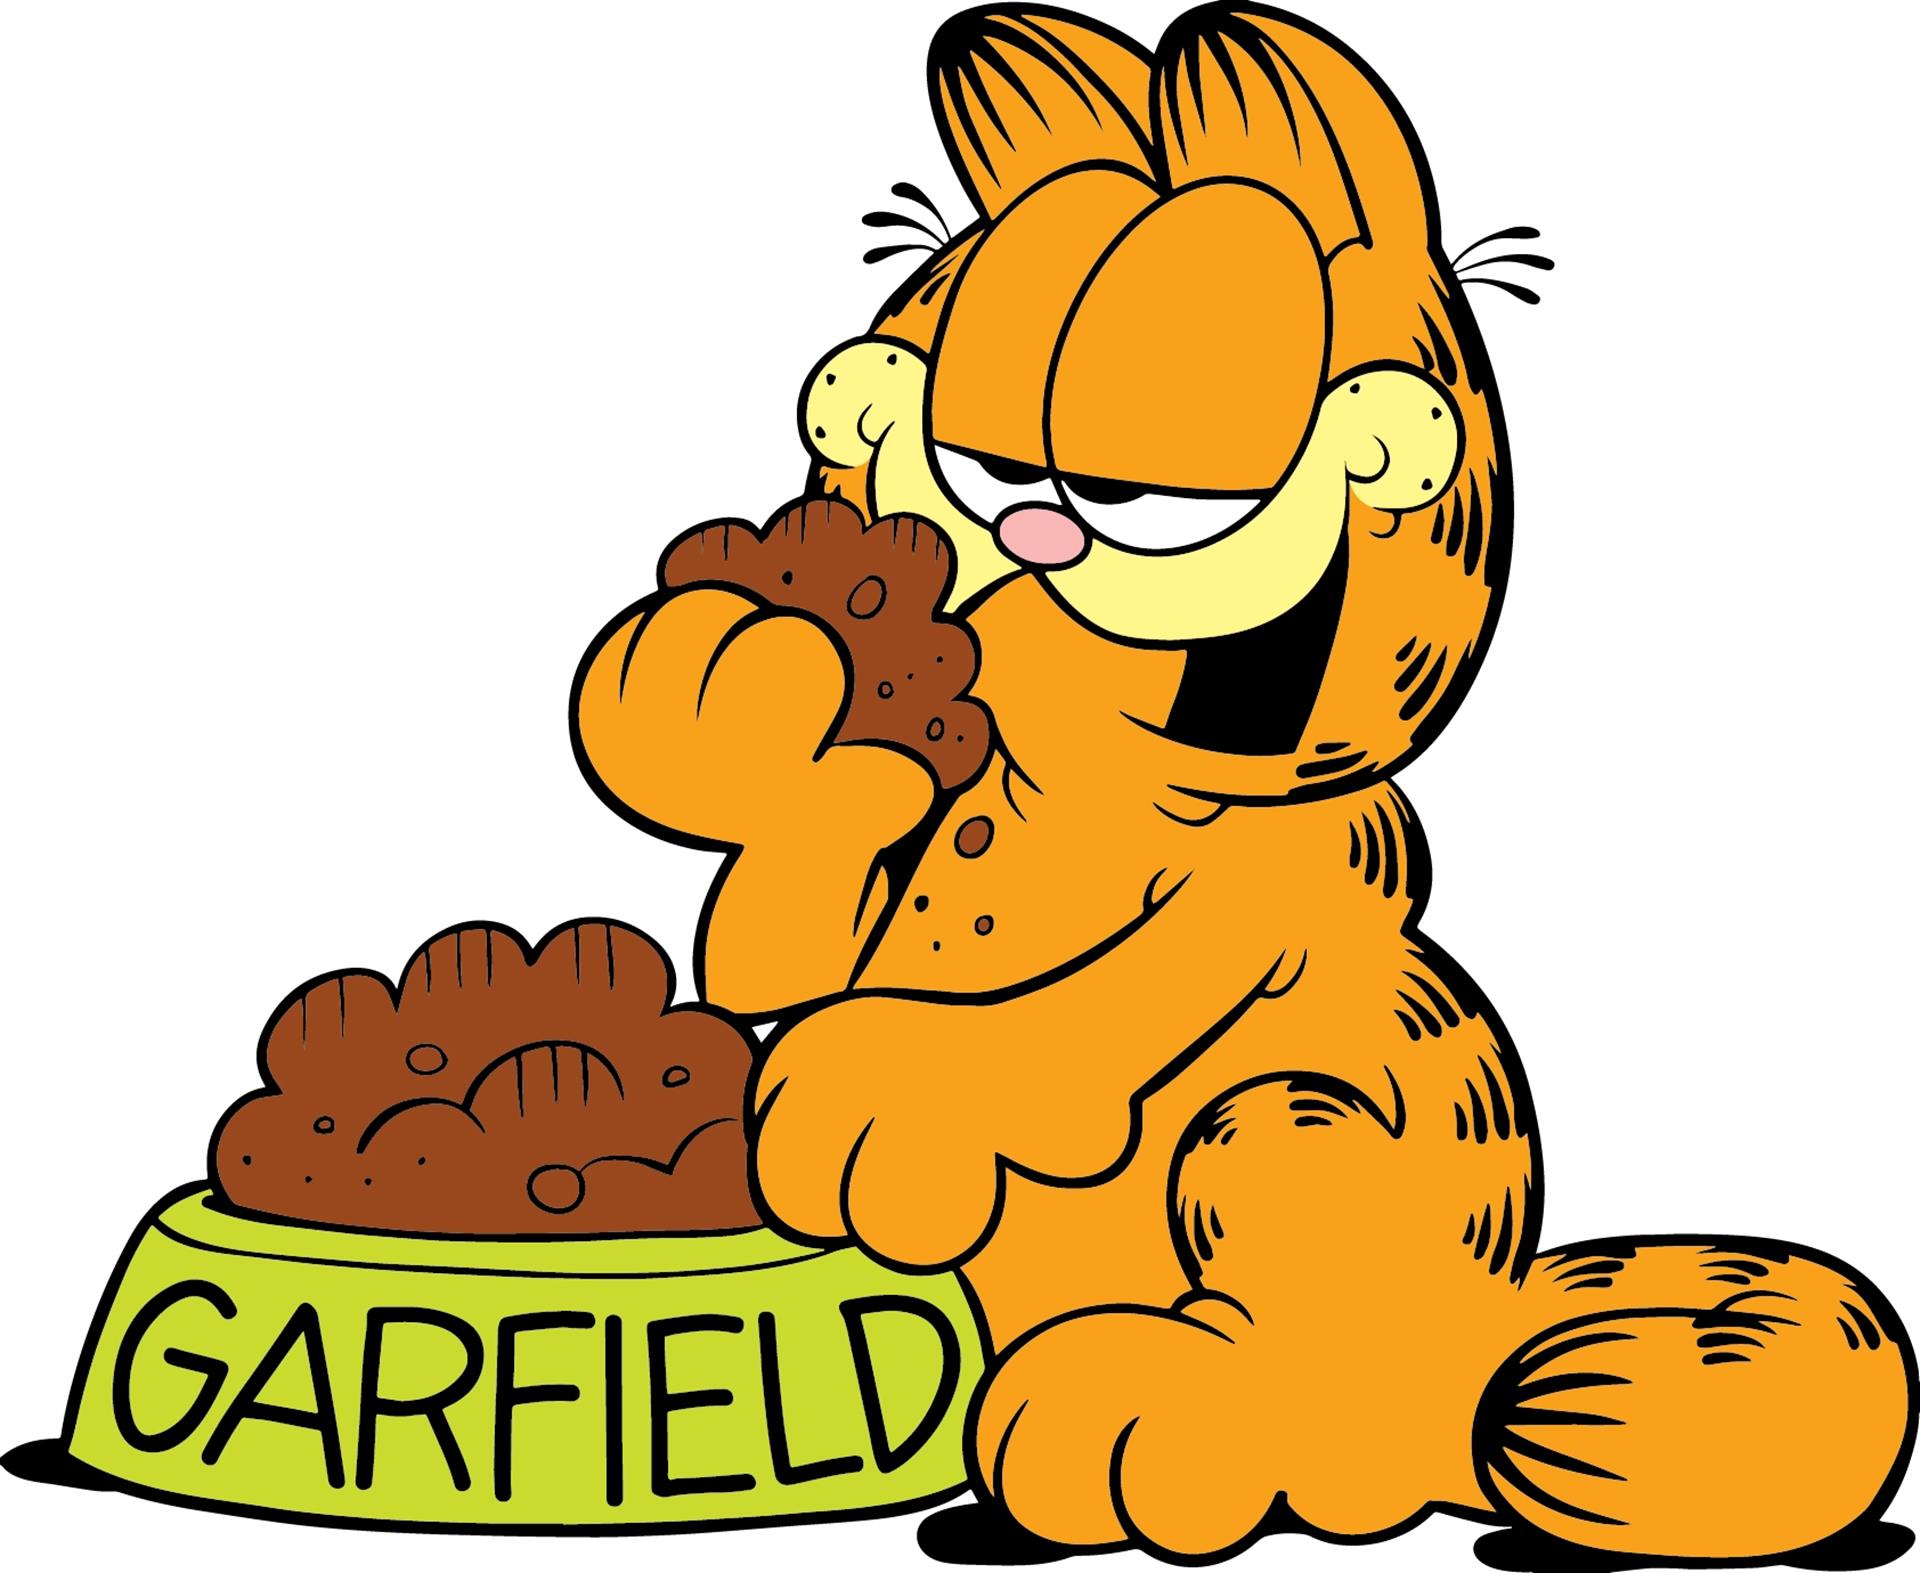 Do You Like Garfield and Friends? 